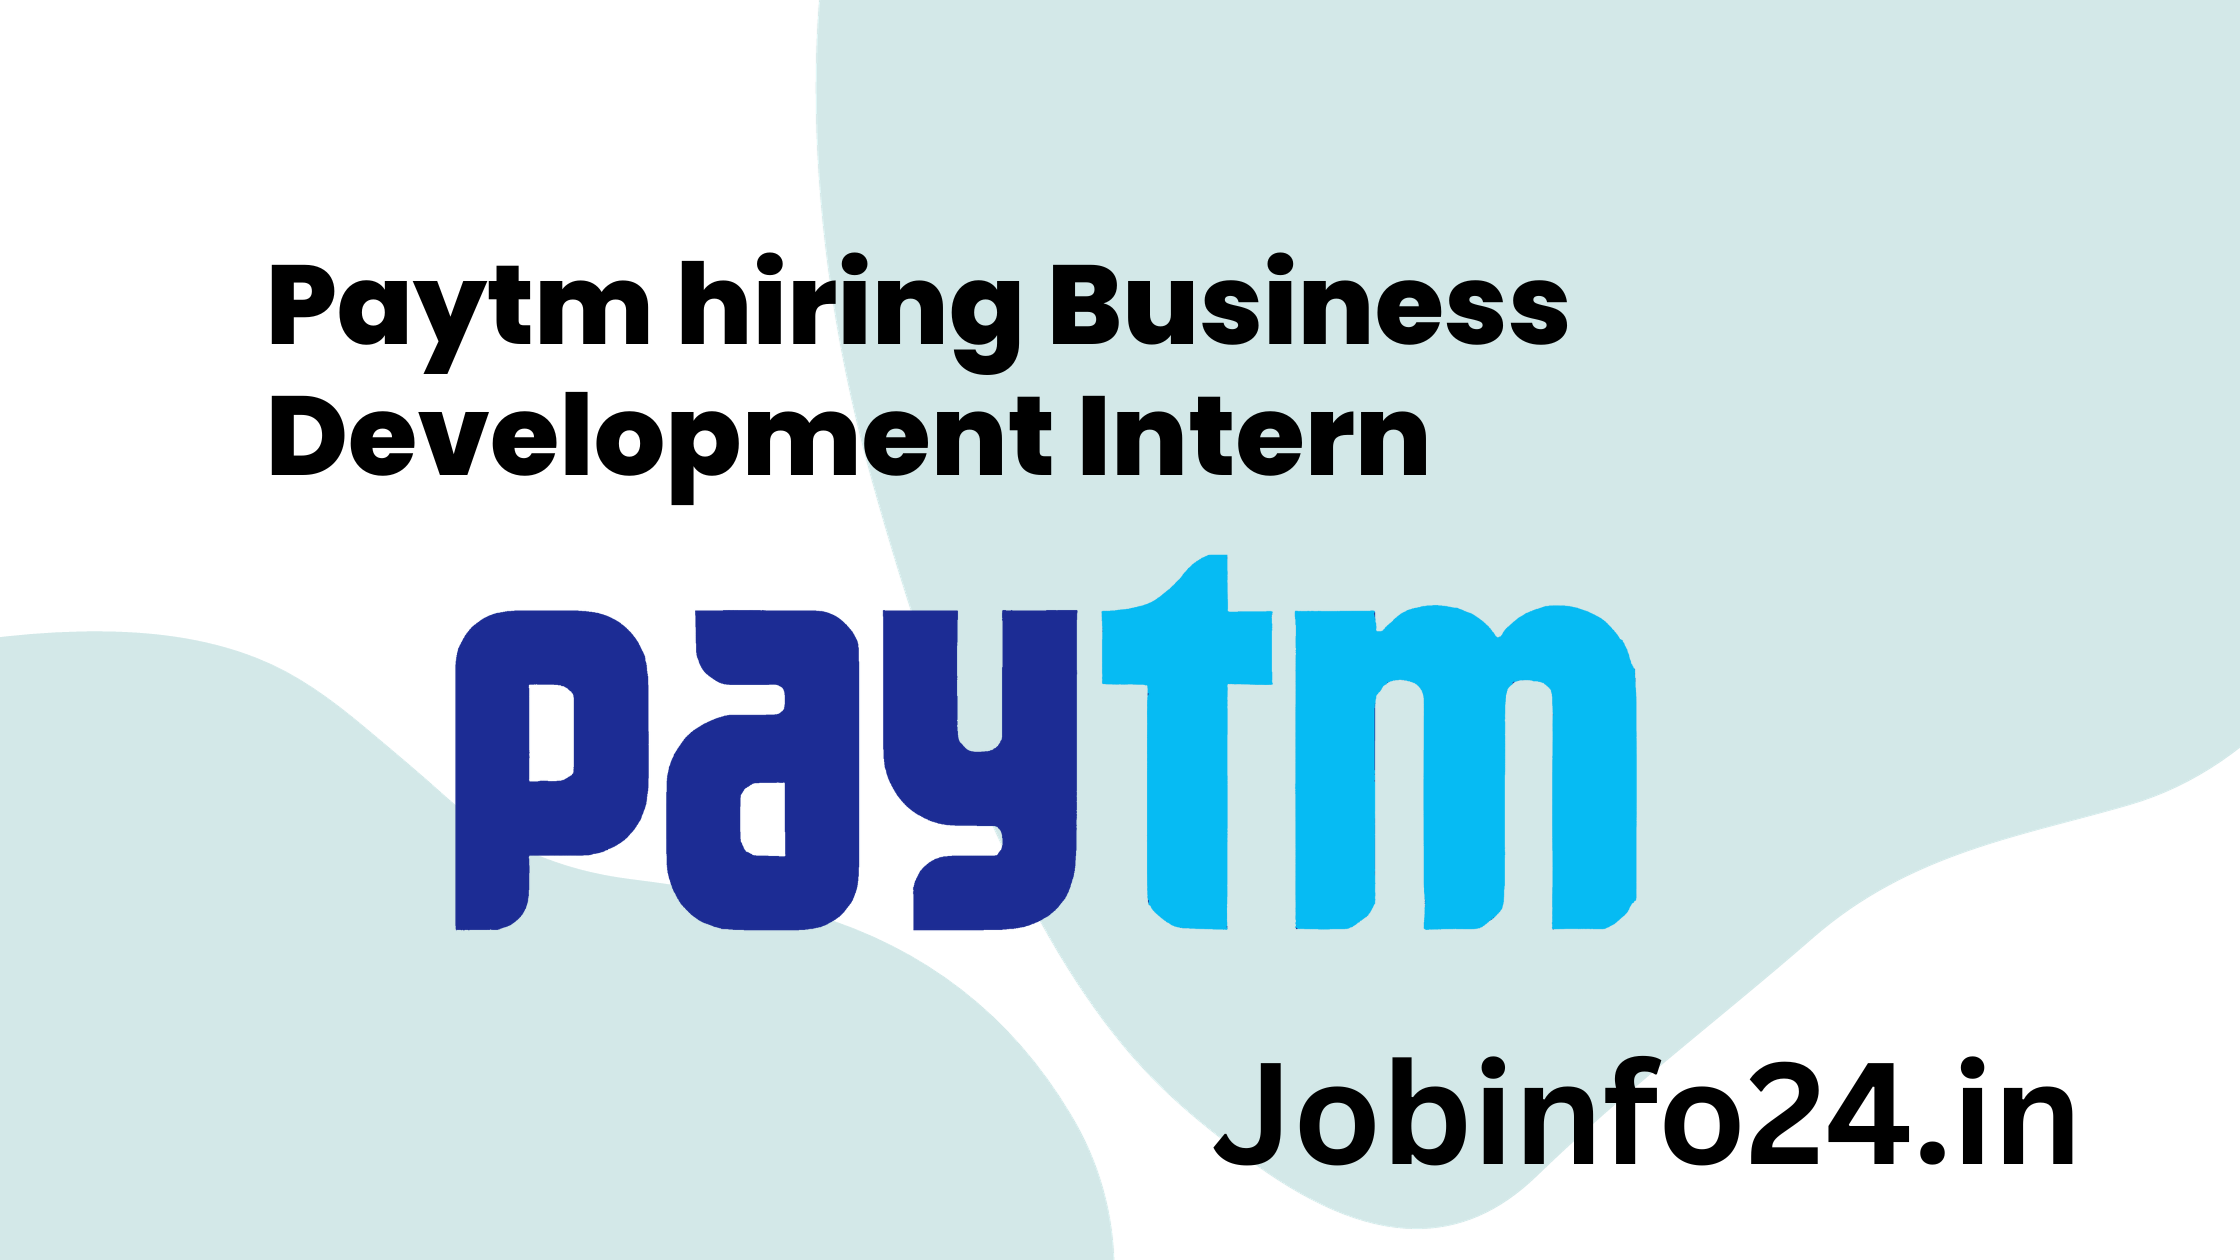 Paytm hiring Business Development Intern